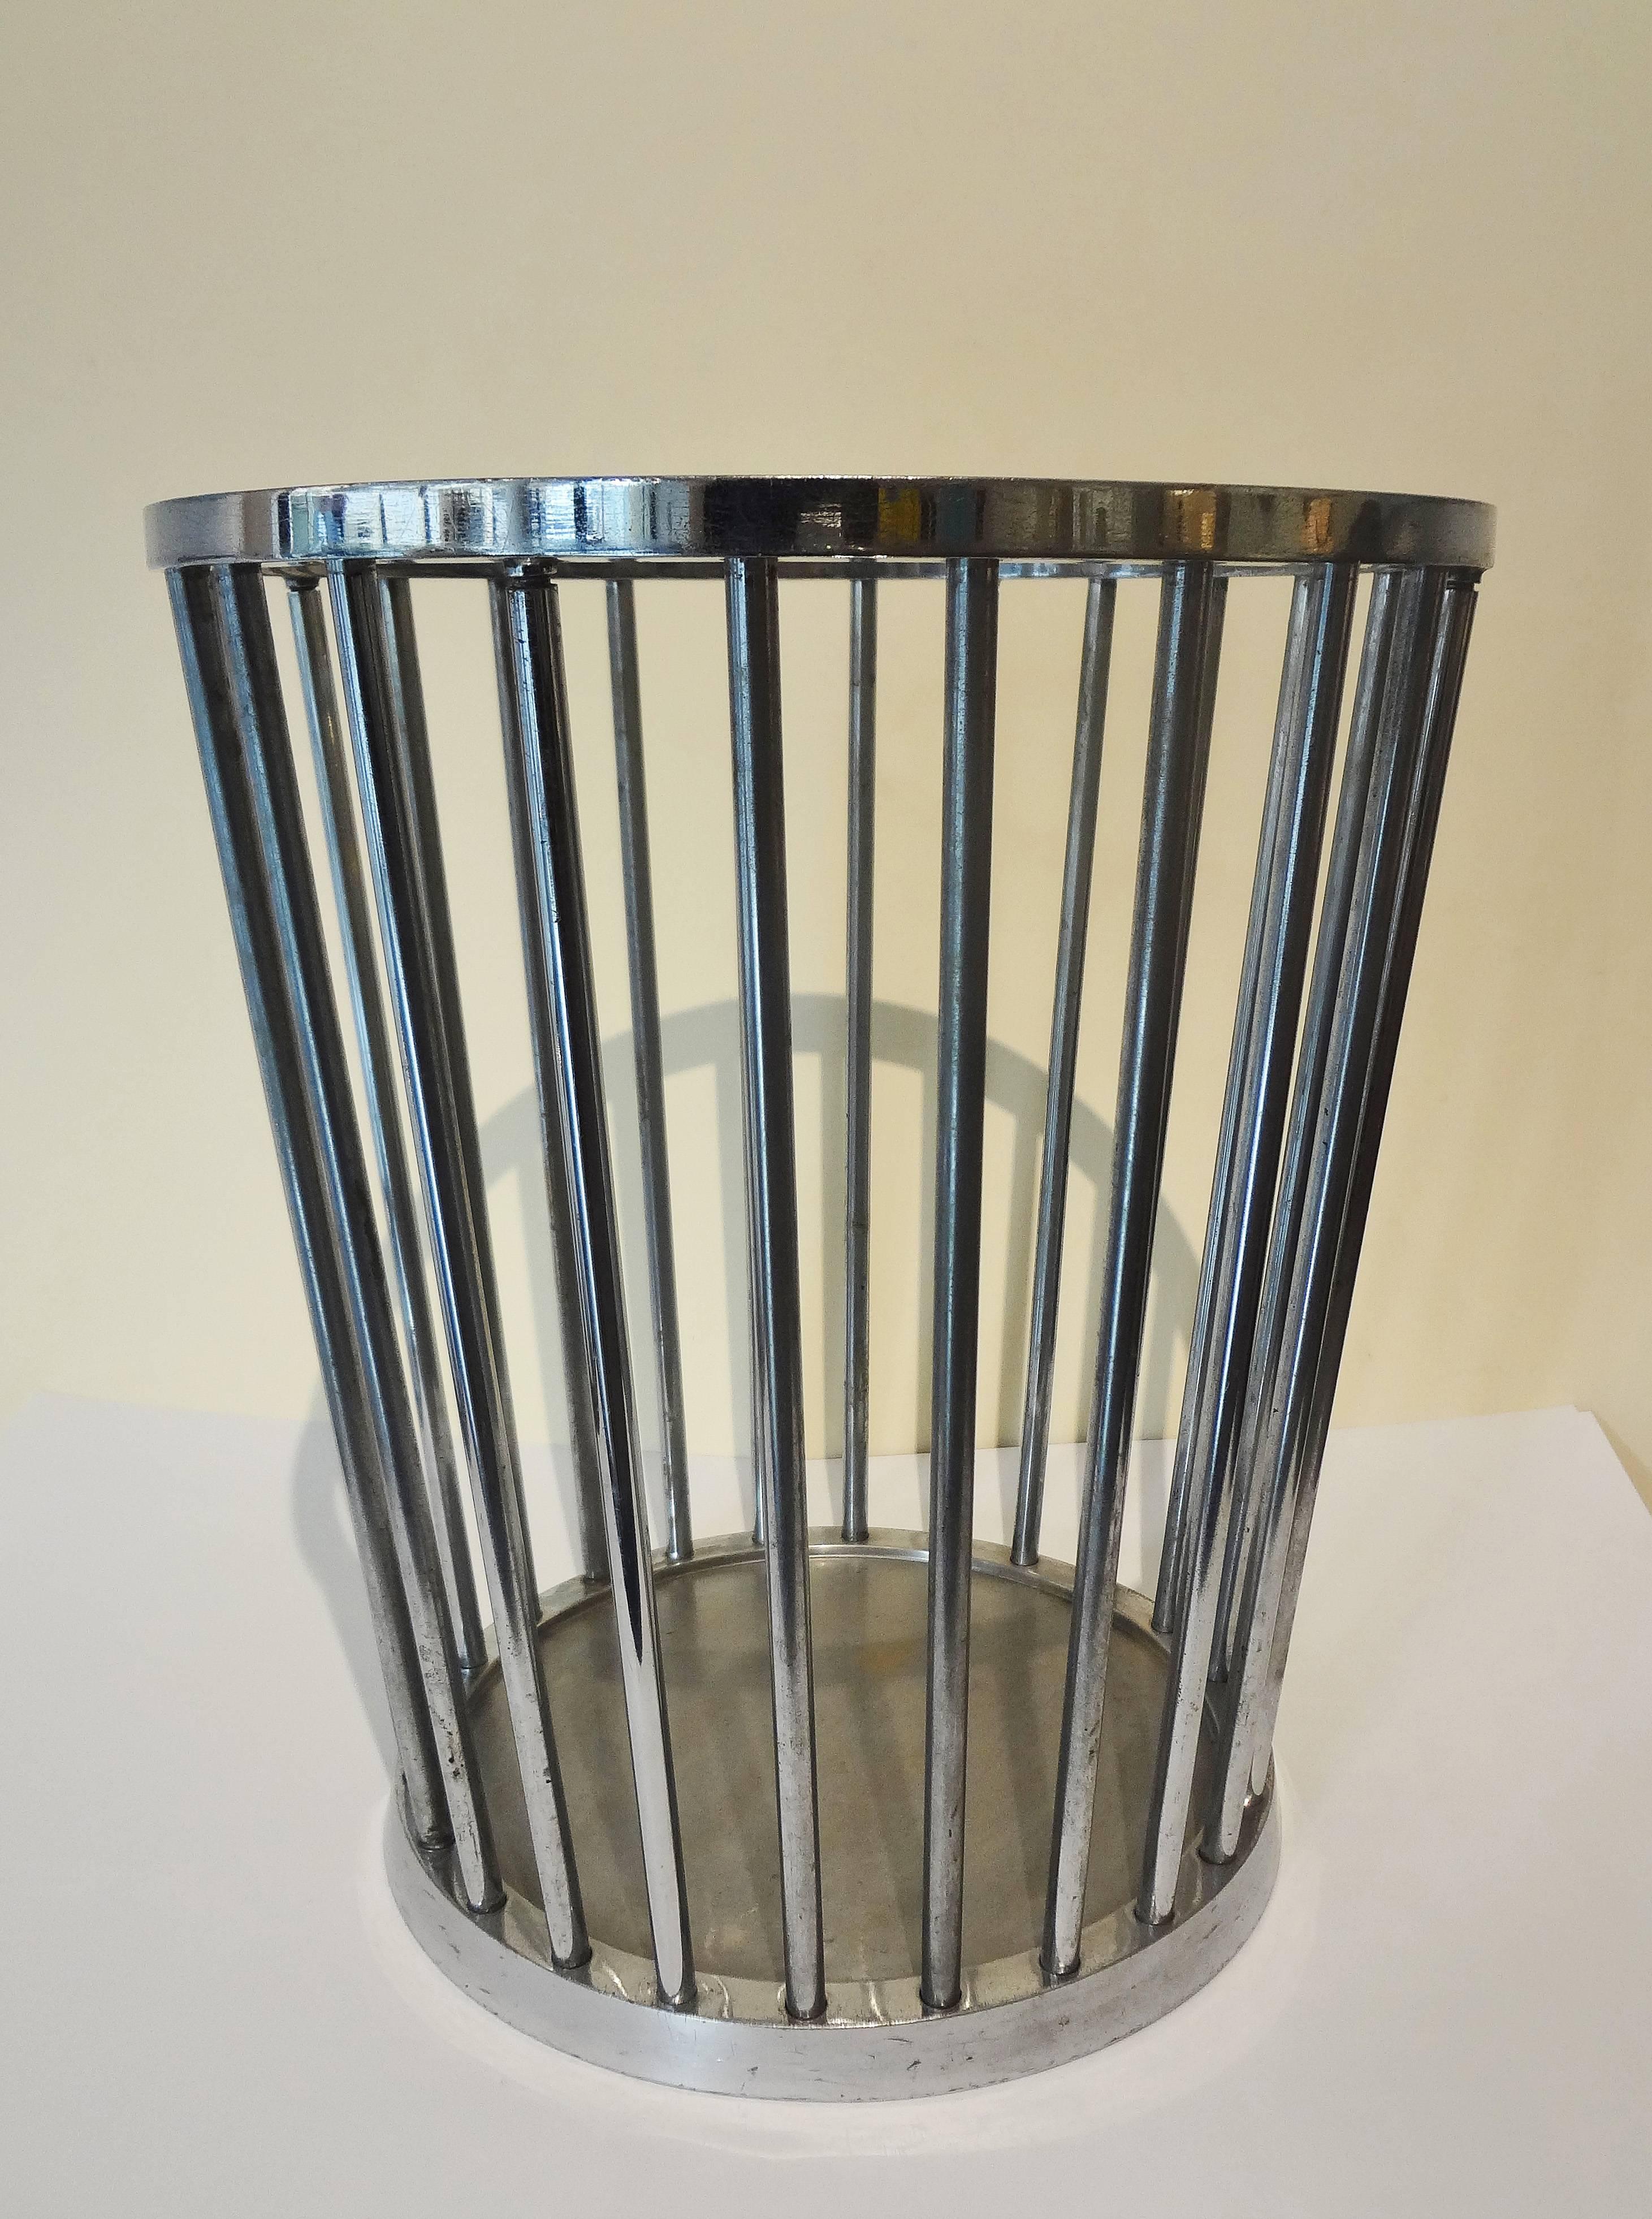 Modernist chromed steel wastebasket by Jacques Adnet, 1930.
Slim columns resting on a circular base.
   